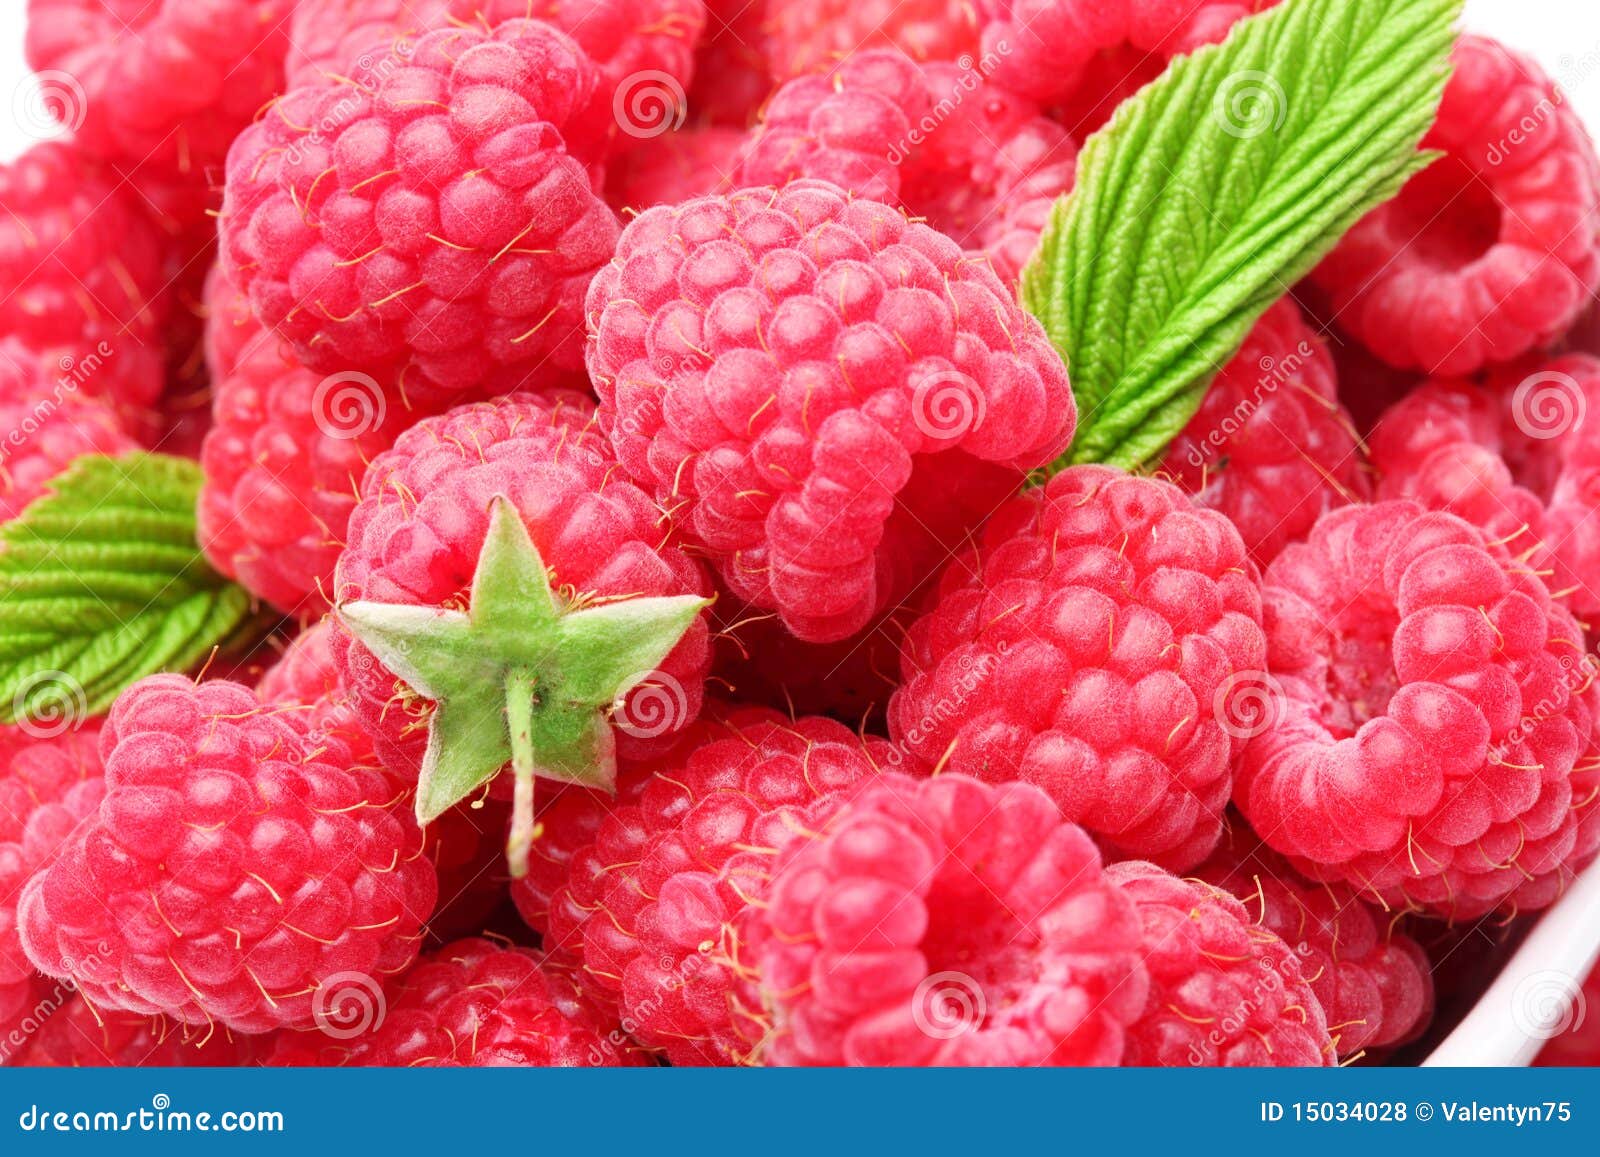 crockery with raspberries.